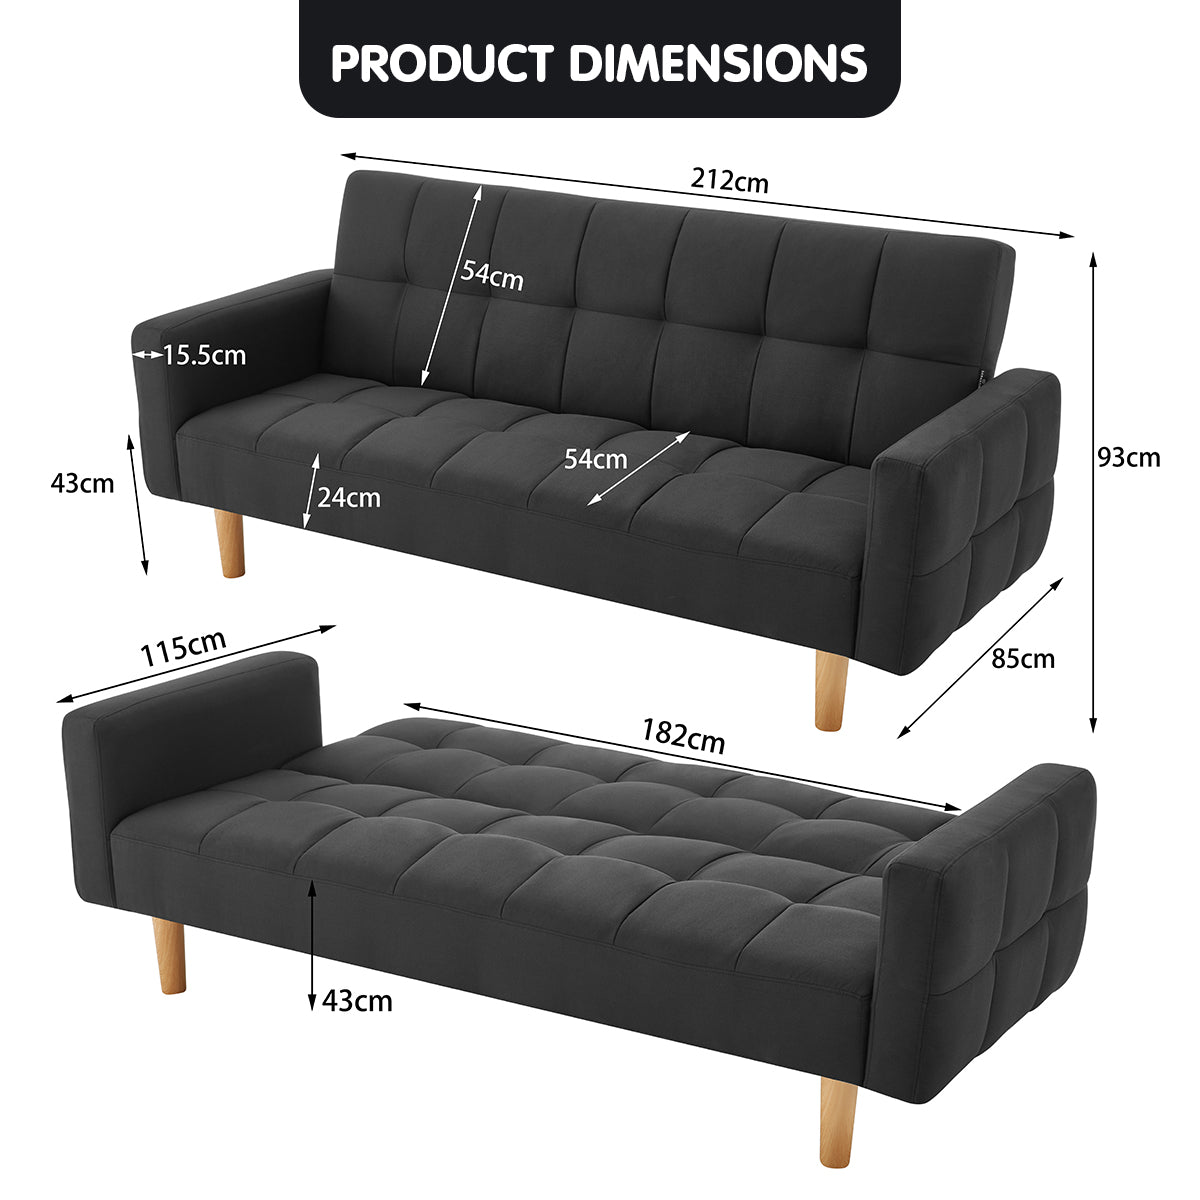 Morgana 3-Seater Fabric Futon Sofa Bed - Black